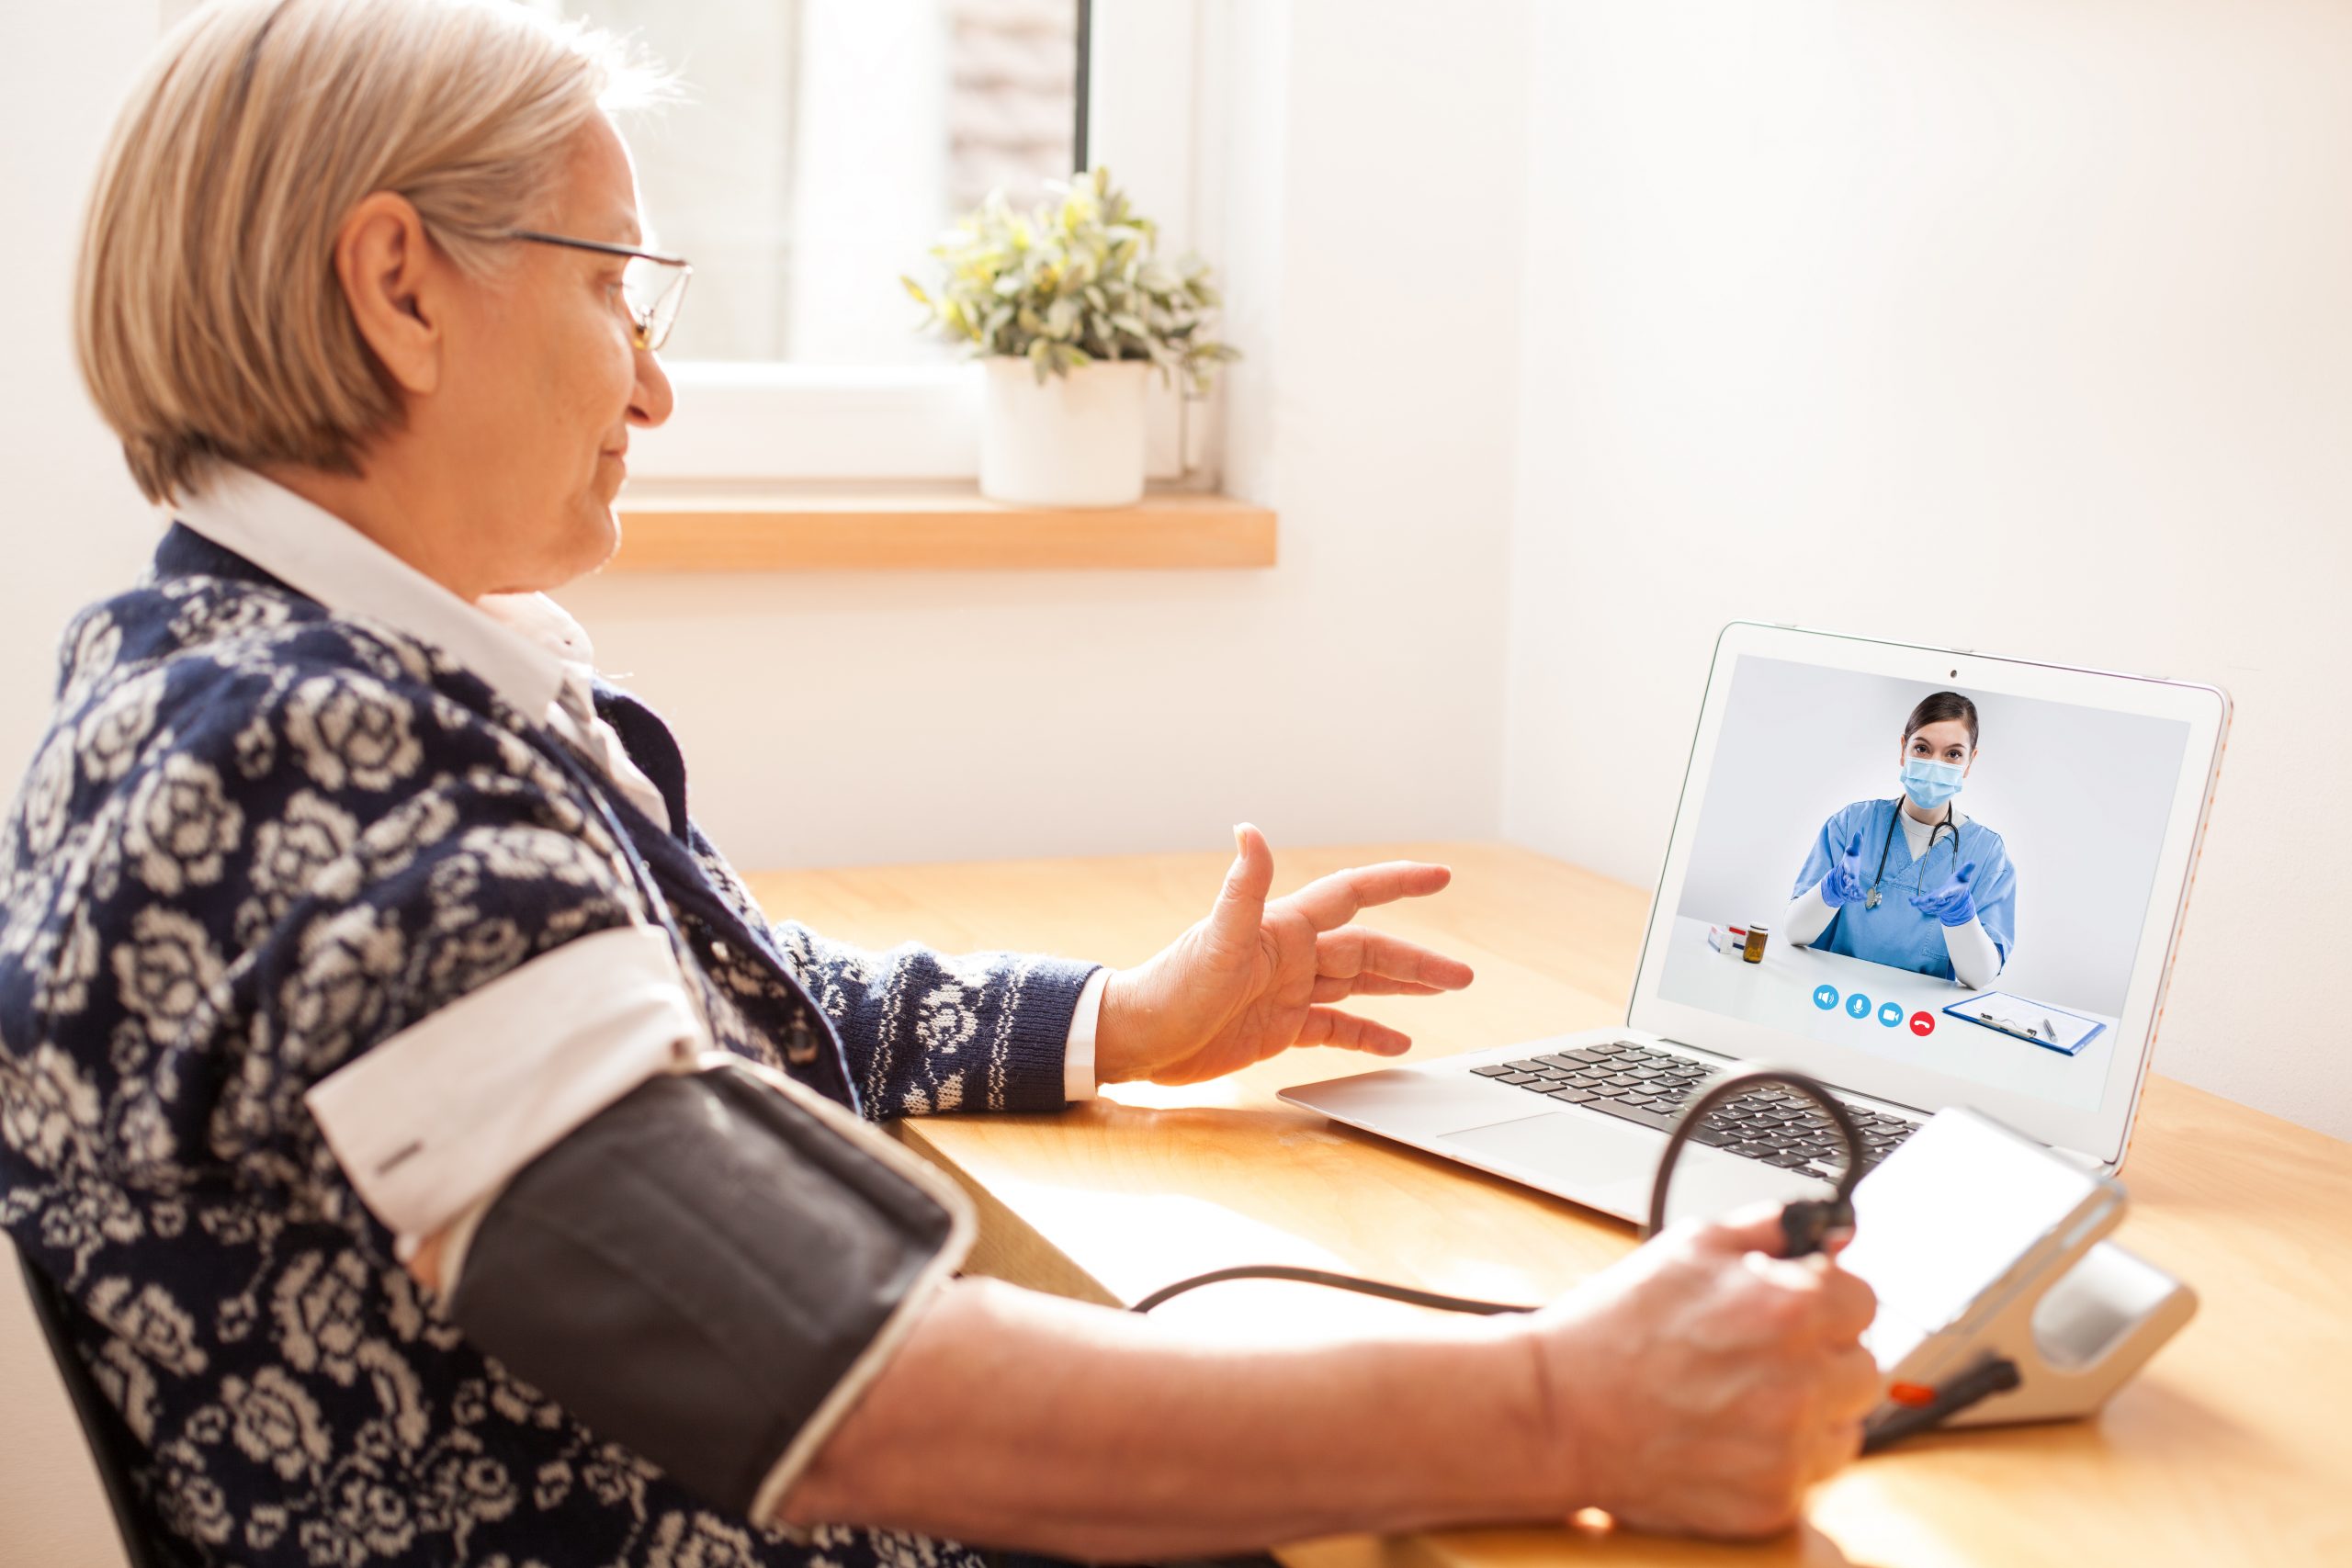 Elderly senior retired woman using sphygmomanometer blood pressure monitor to measure heart rate pulse,talking to female e-doctor via online video call help line,self-monitoring remote telemedicine